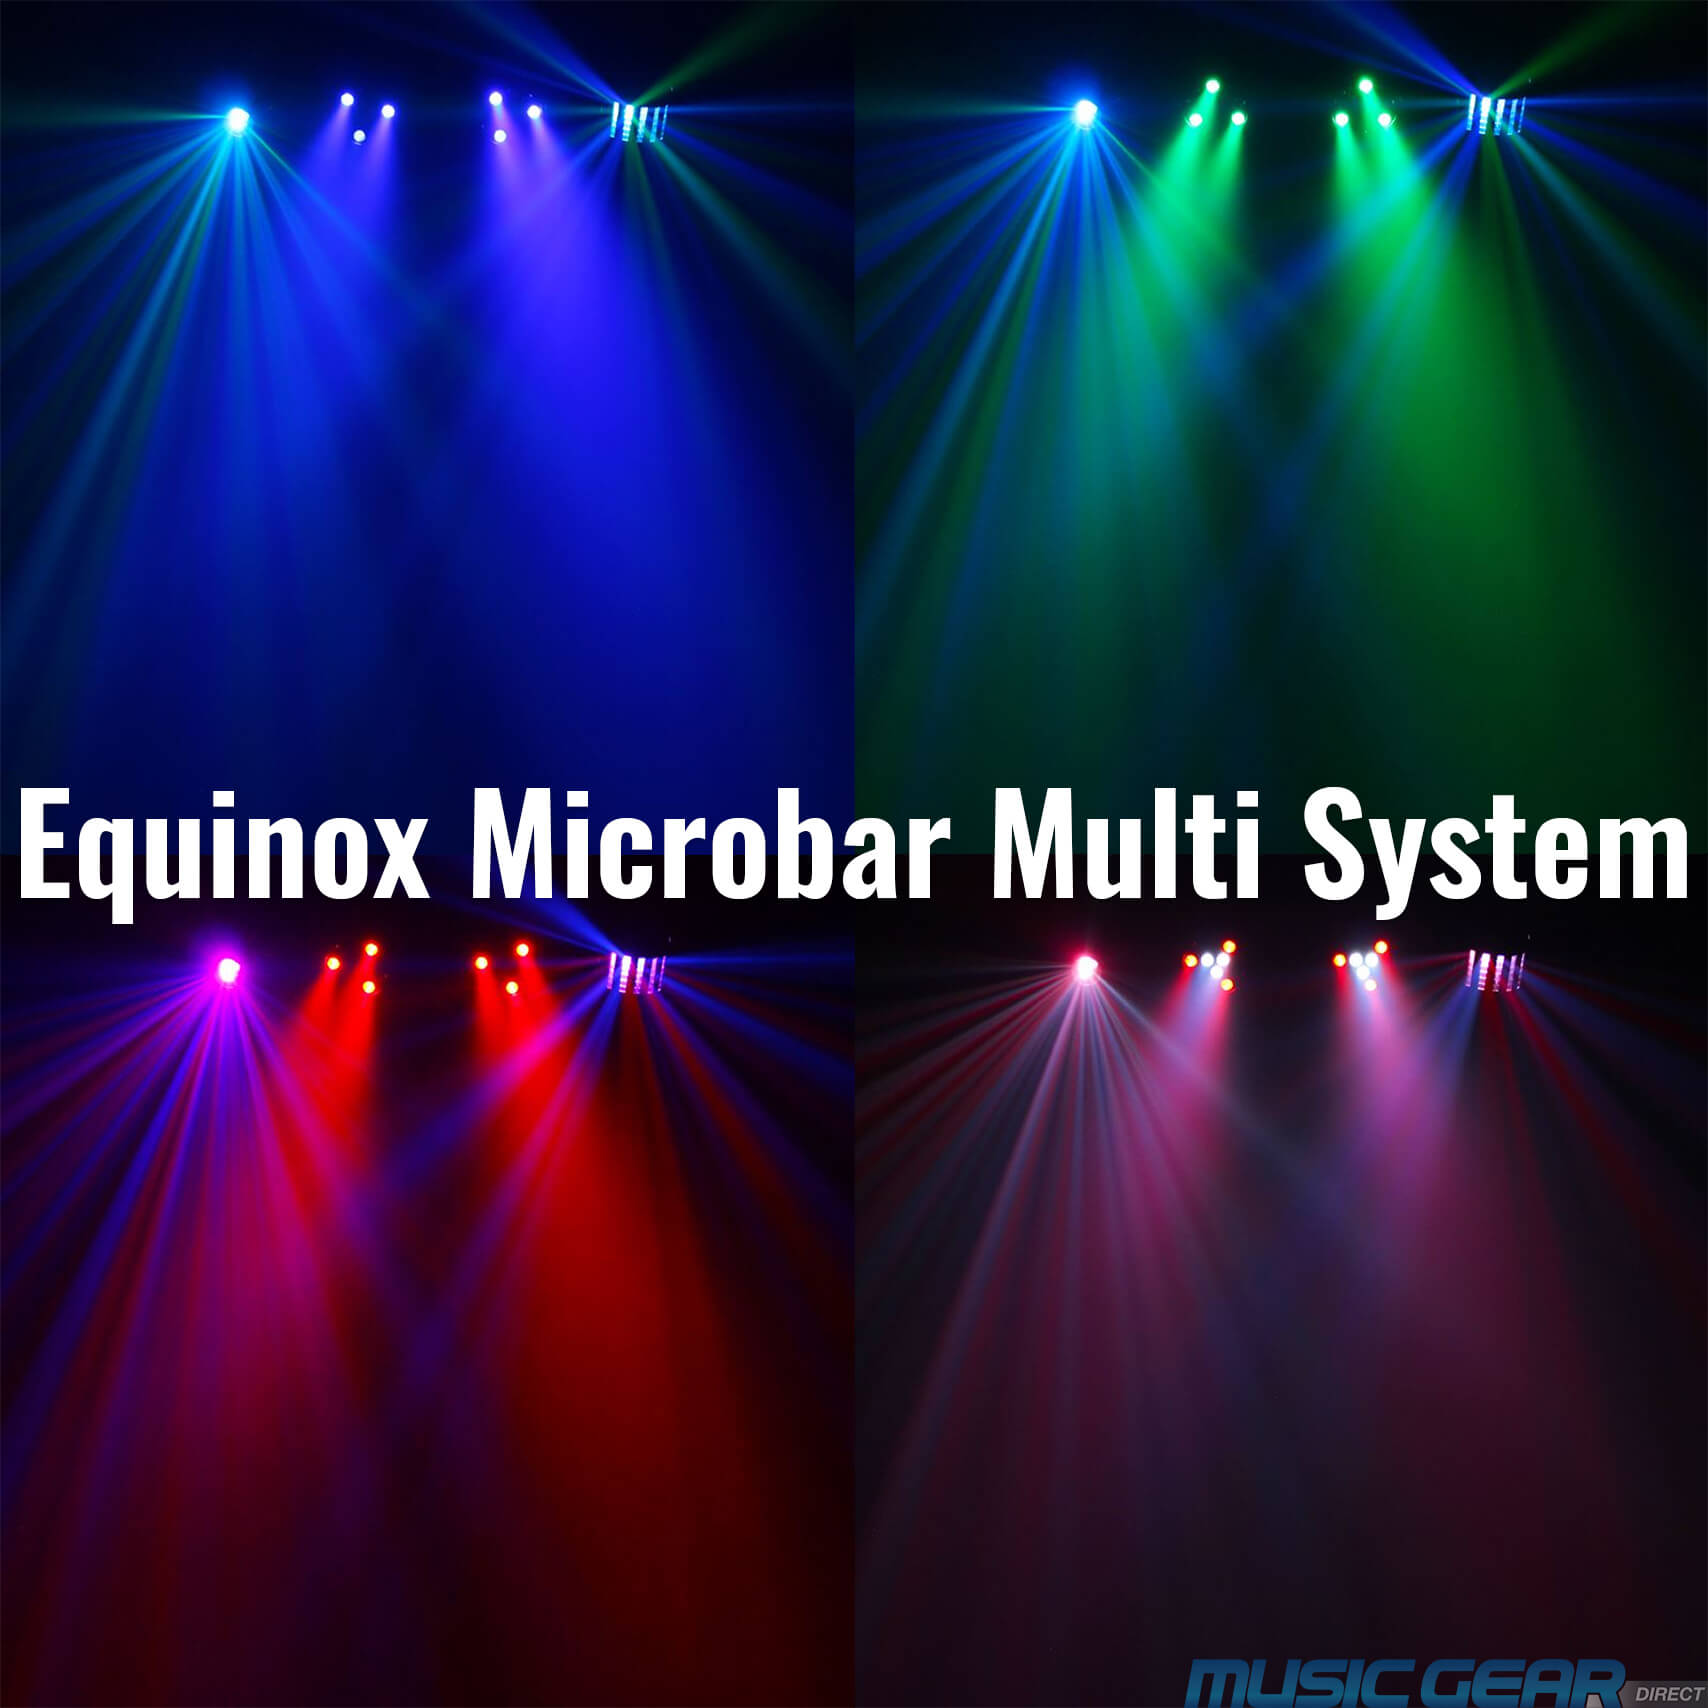 Equinox EQLED136 Microbar Multi System Lighting Demo